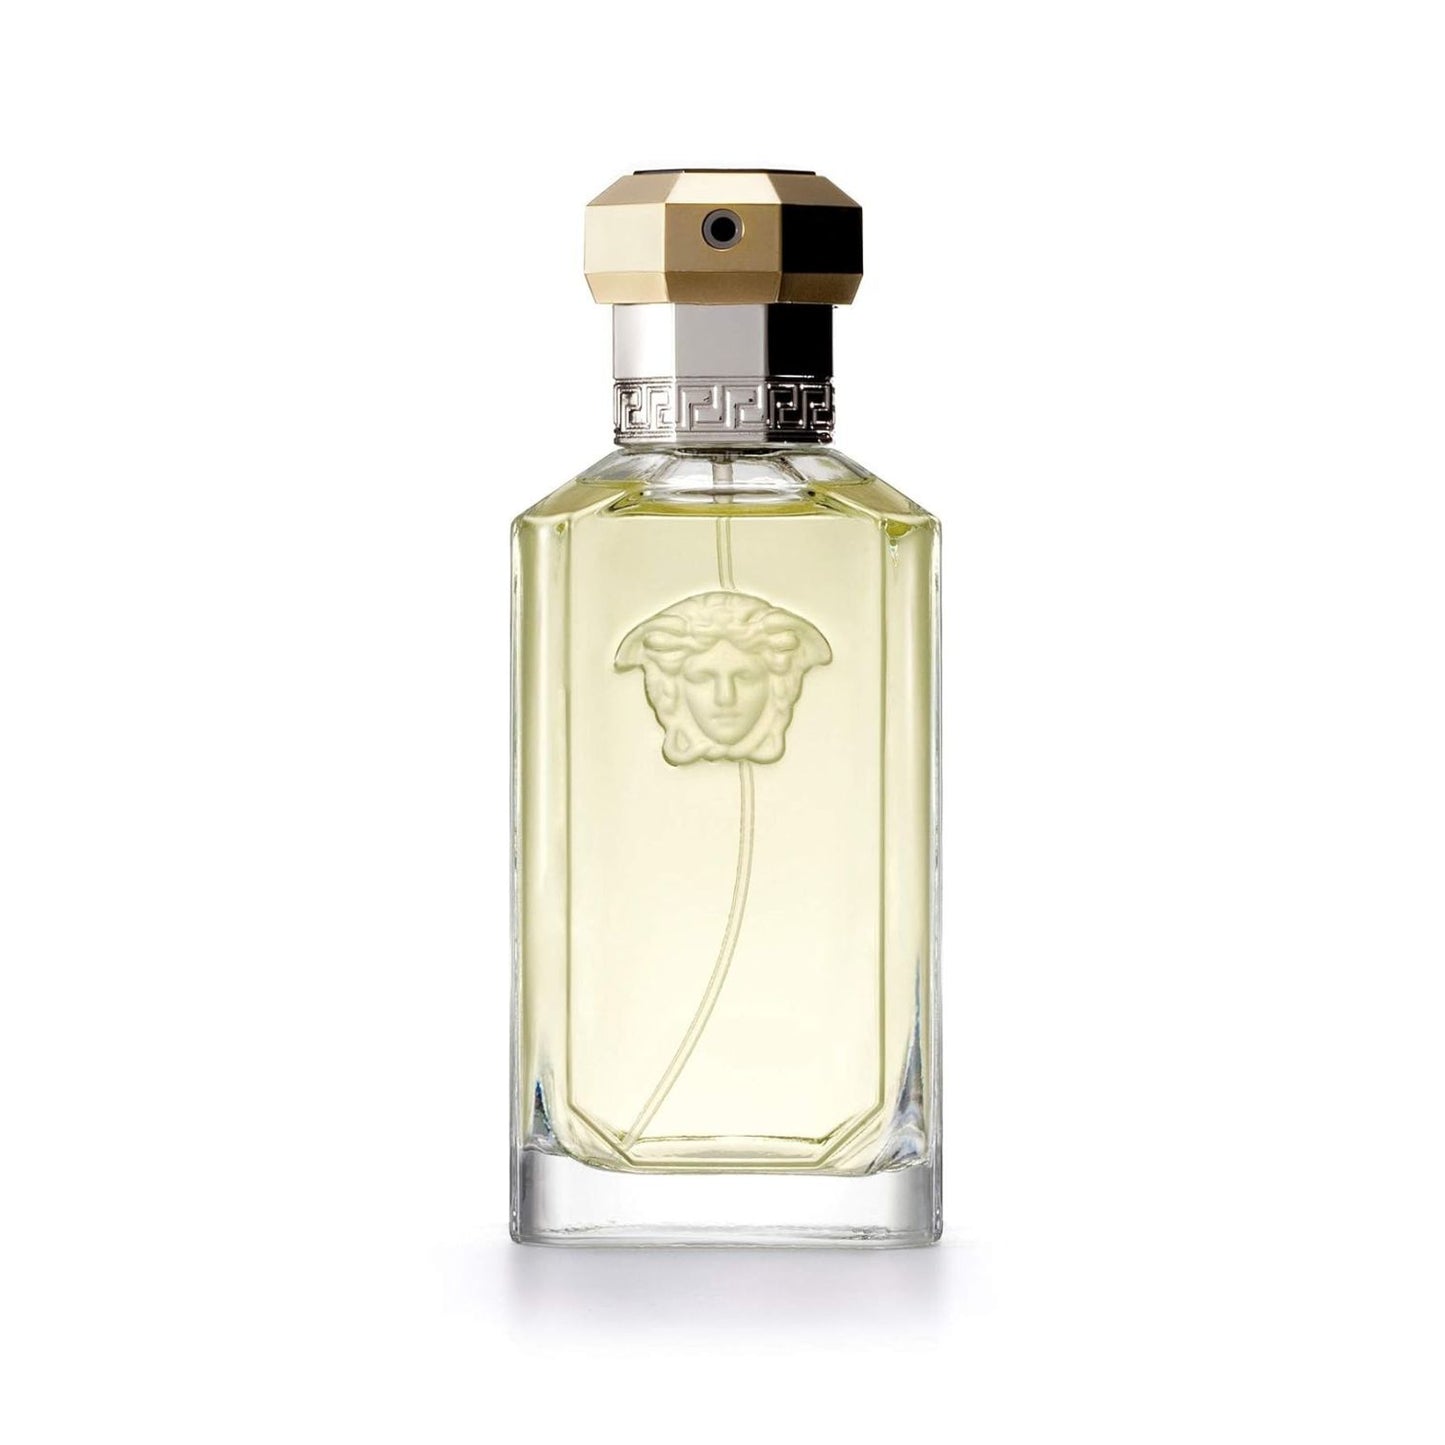 Perfume Versace Dreamer 100 ml para hombre